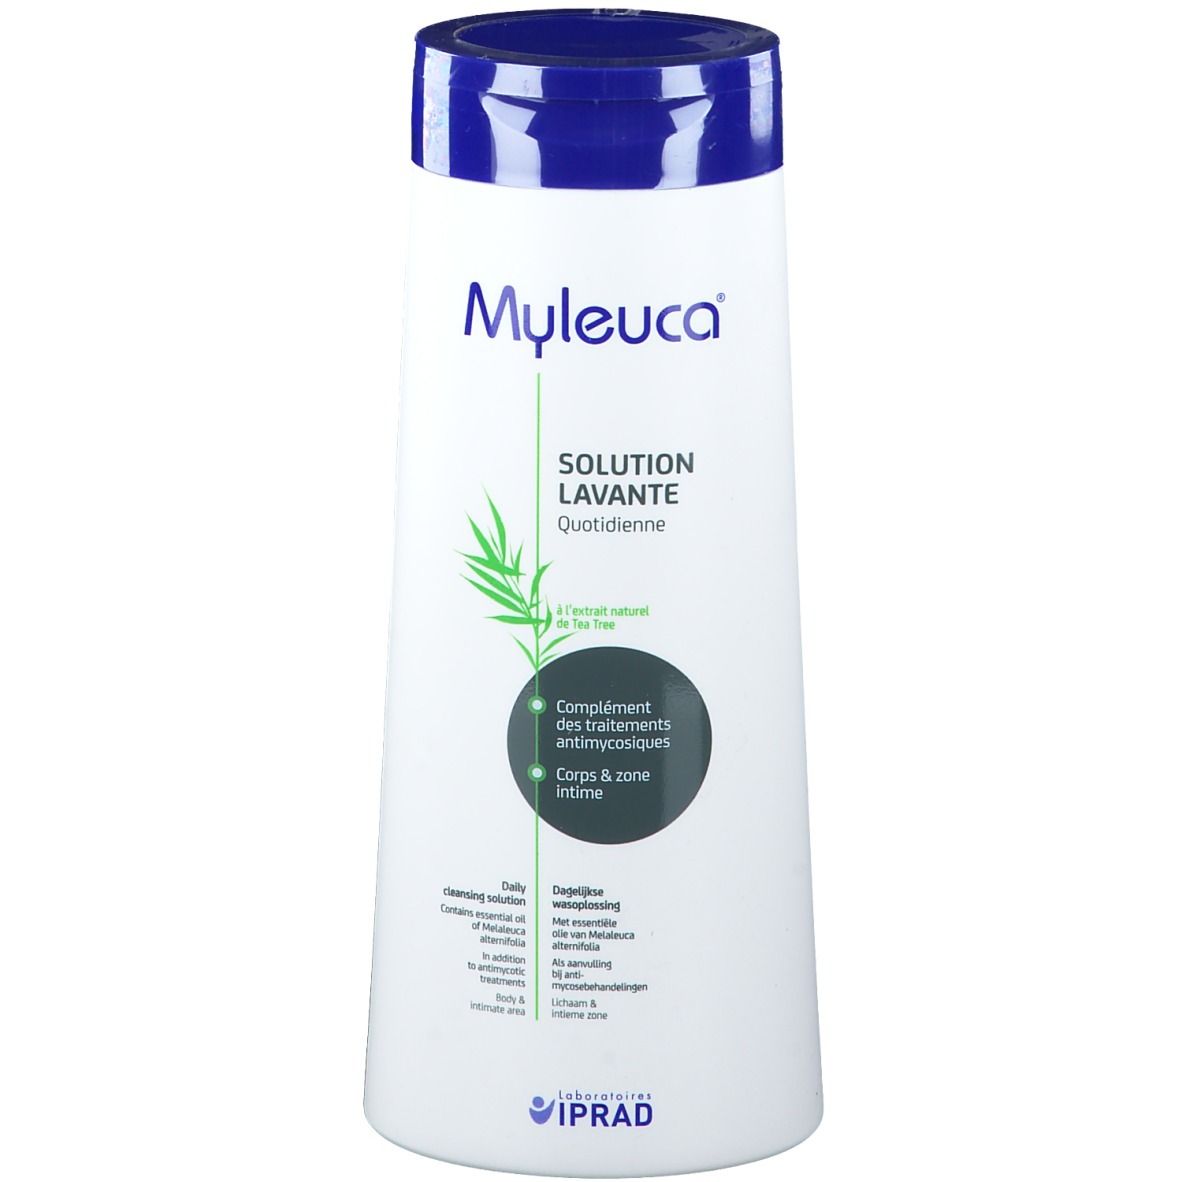 Myleuca® Solution lavante